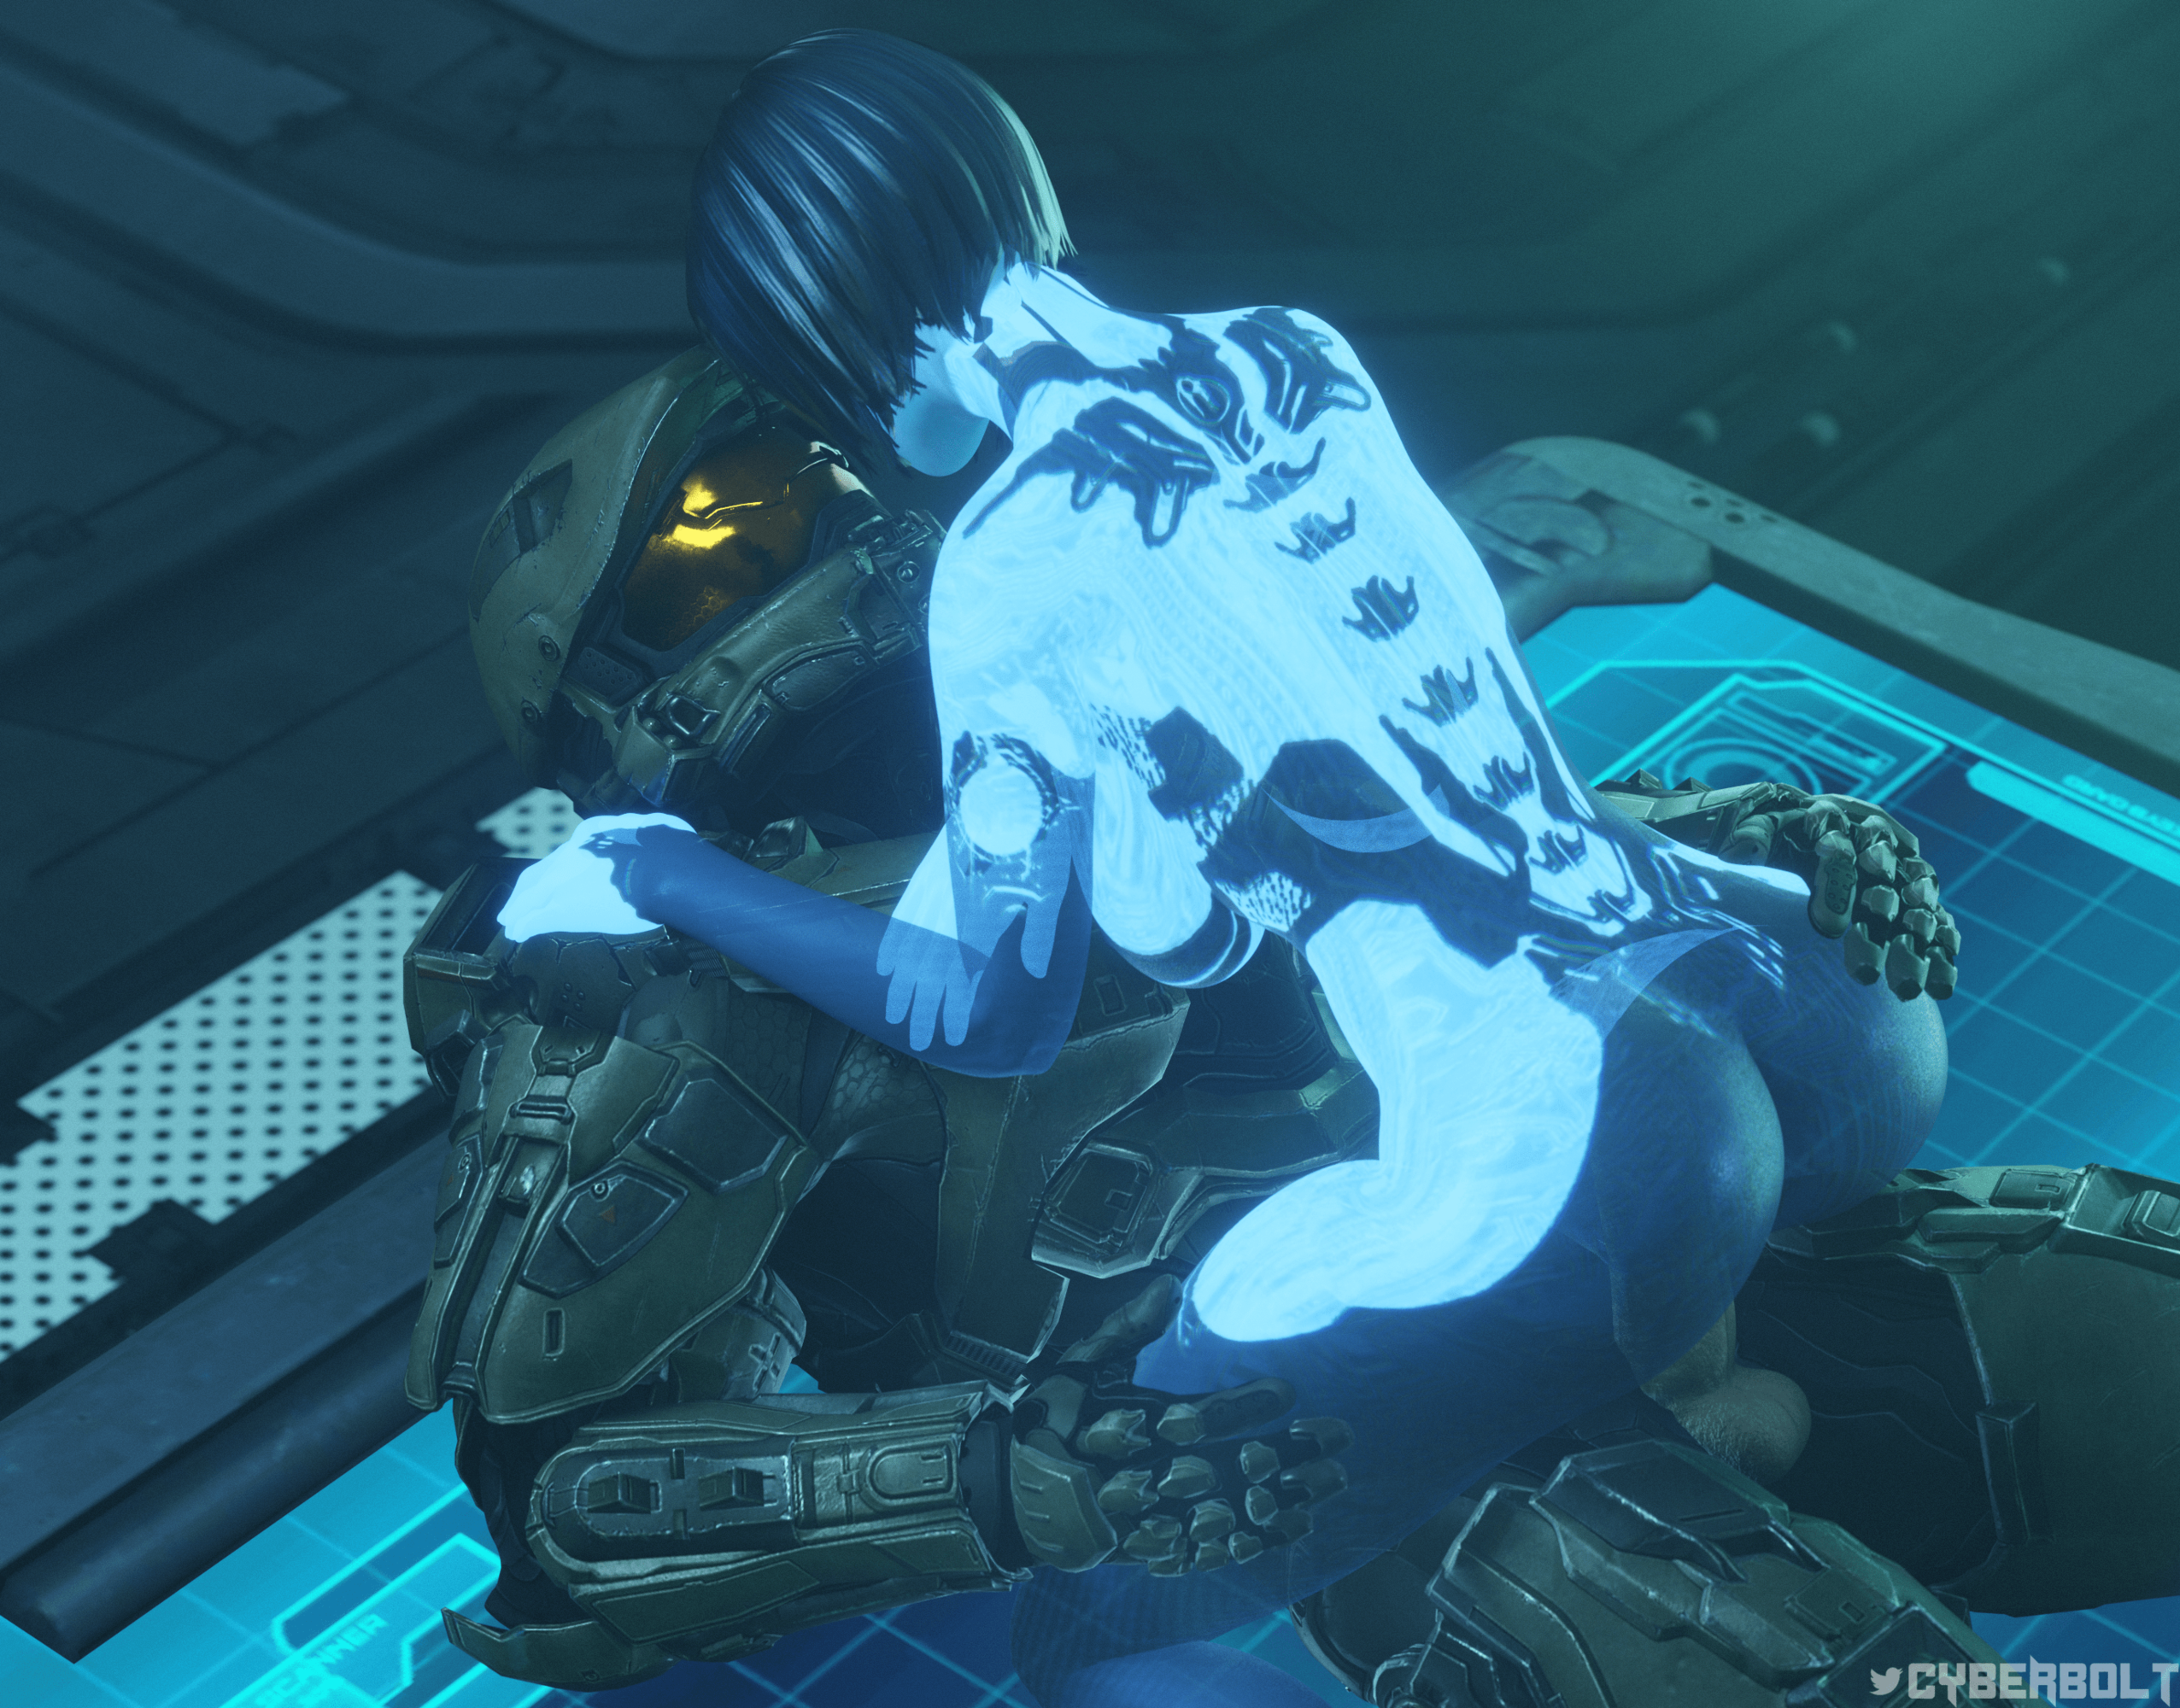 Slushe - Galleries - Halo 4 Master Chief and Cortana Alone Time